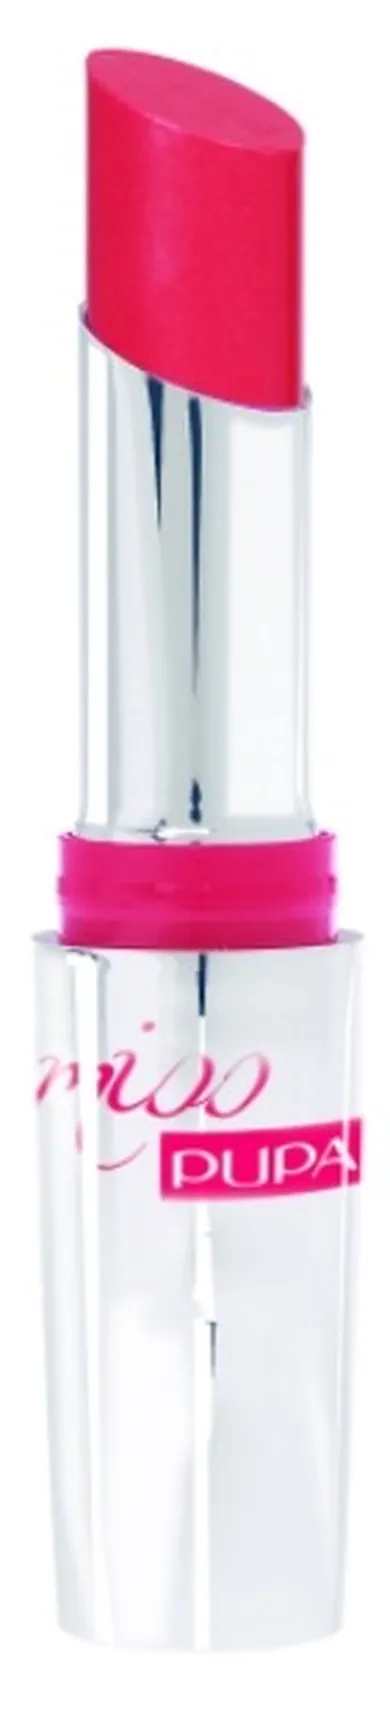 Pupa, Miss Pupa Ultra Brilliant Lipstick, pomadka do ust 202, 2,4 ml